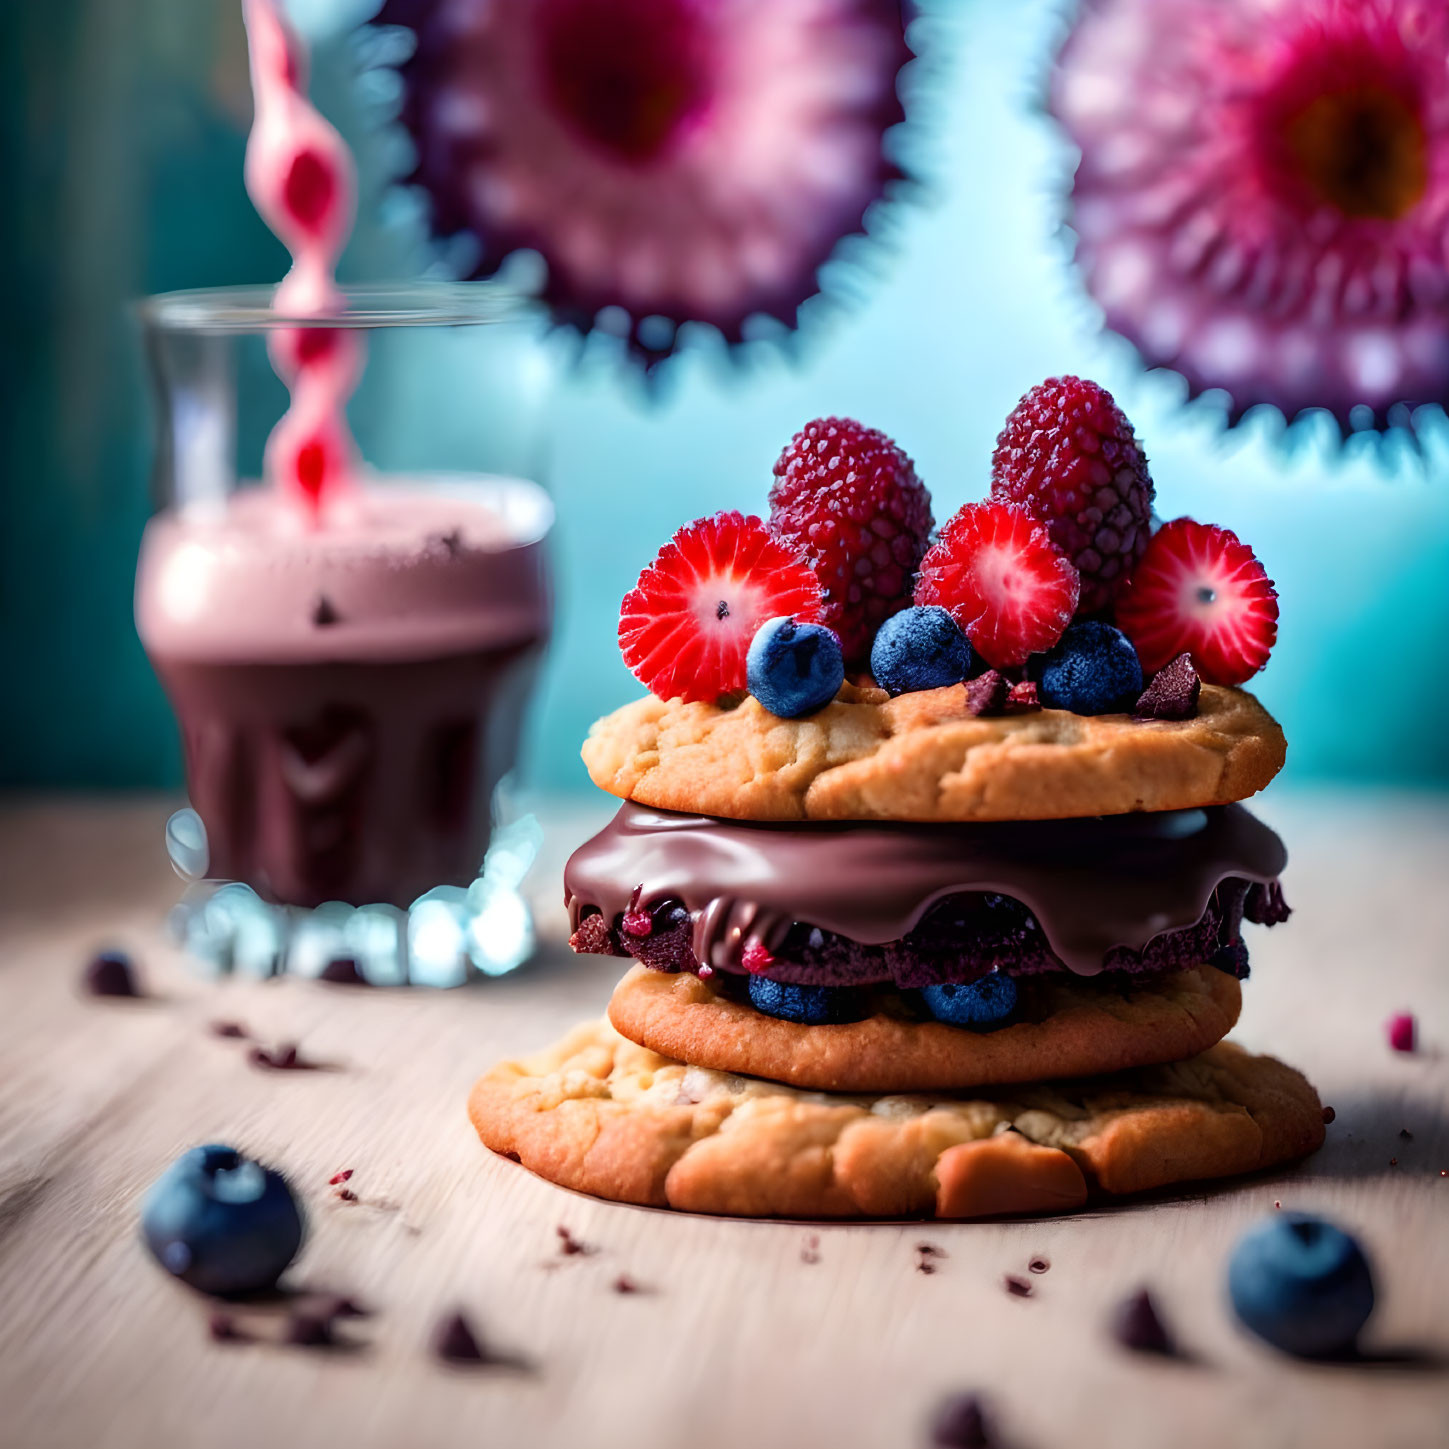 Decadent dessert scene with chocolate-coated biscuit and pink milkshake